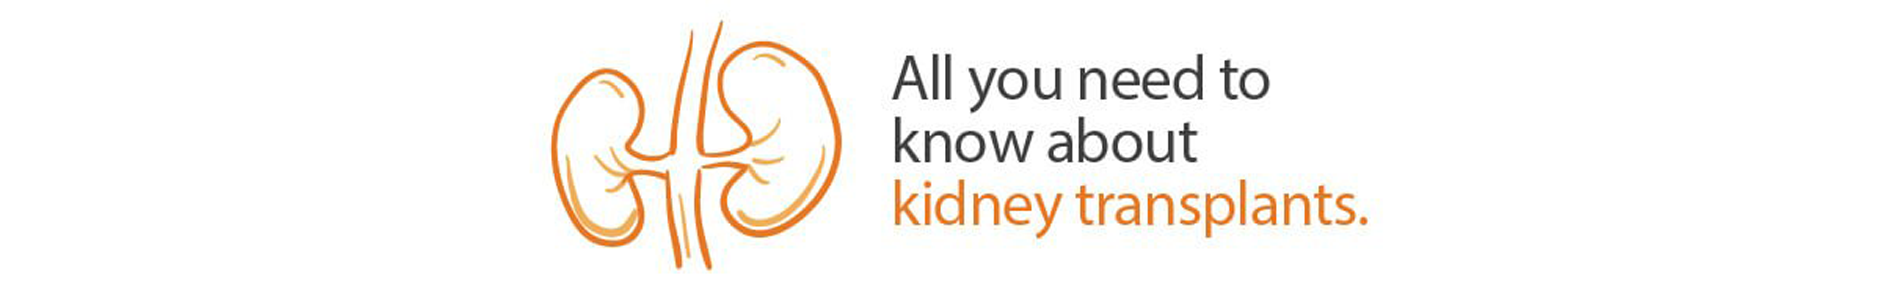 Know About Kidney Transplants